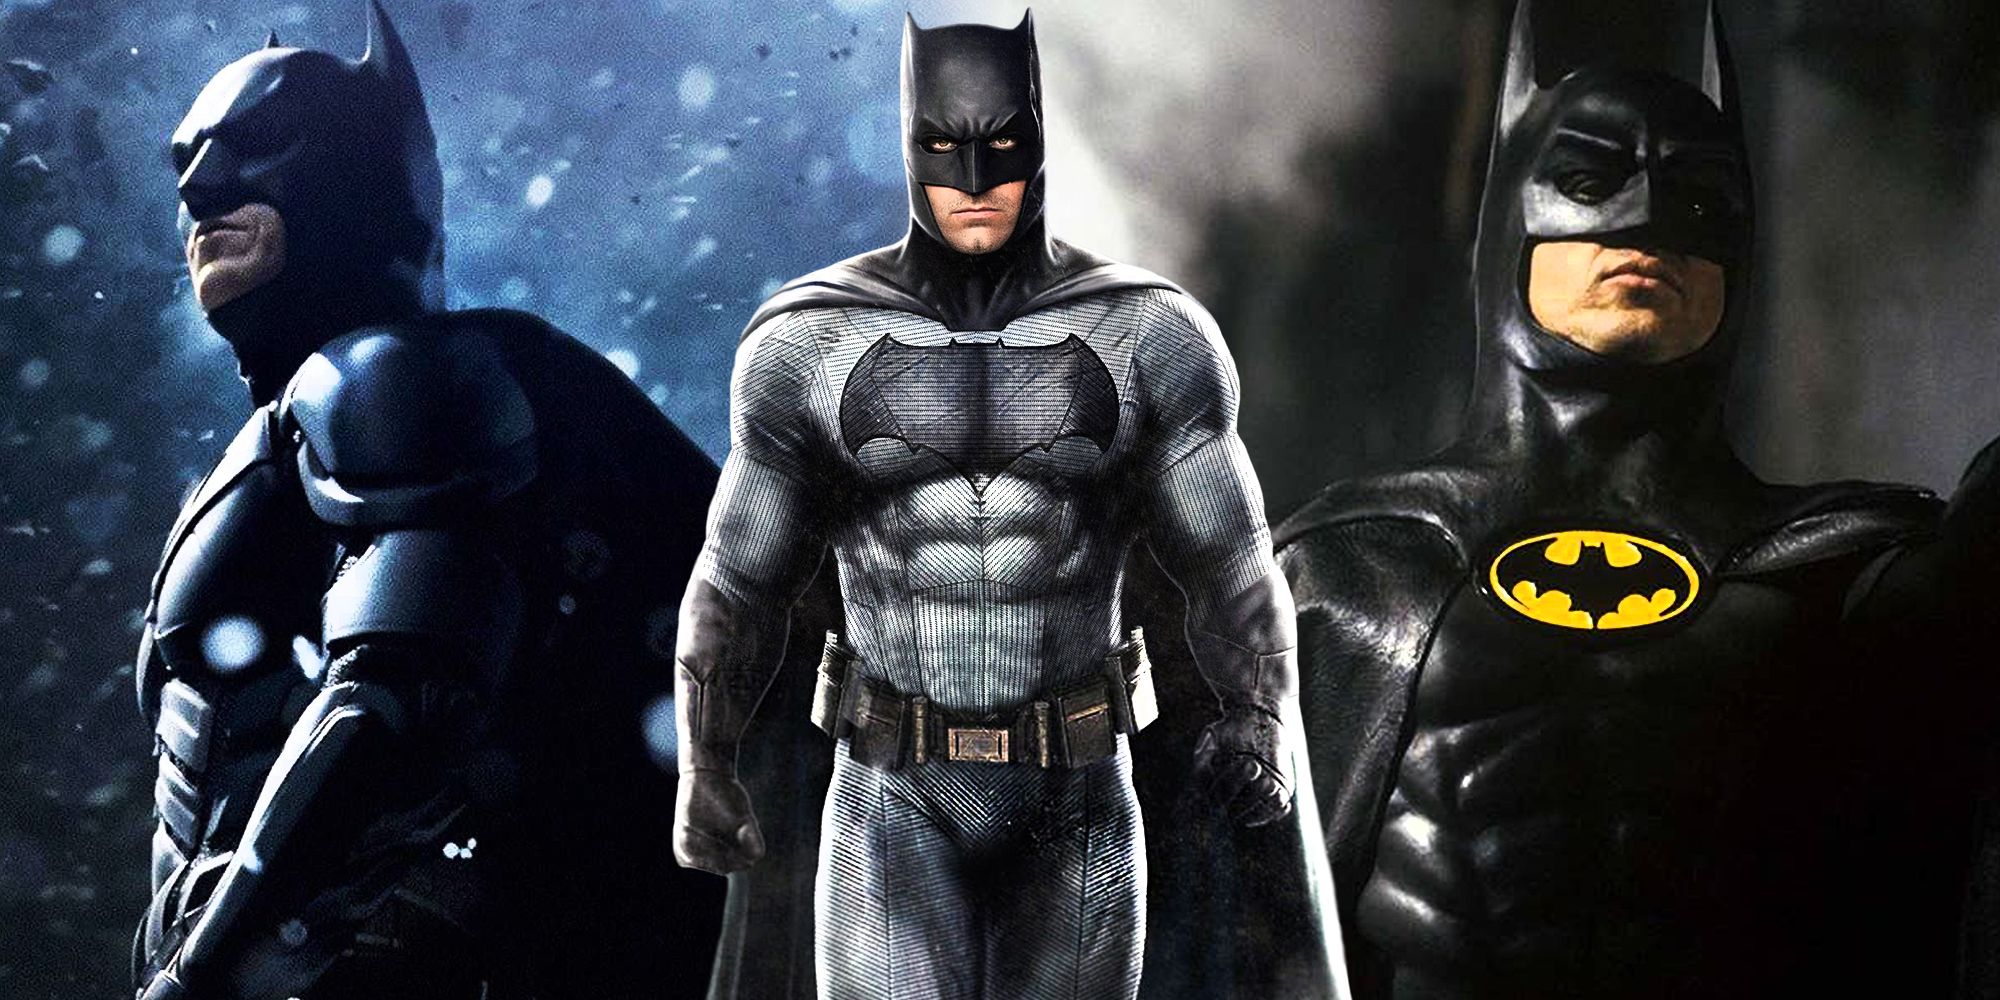 Christian Bale, Ben Affleck, and Michael Keaton as Live-Action Batman